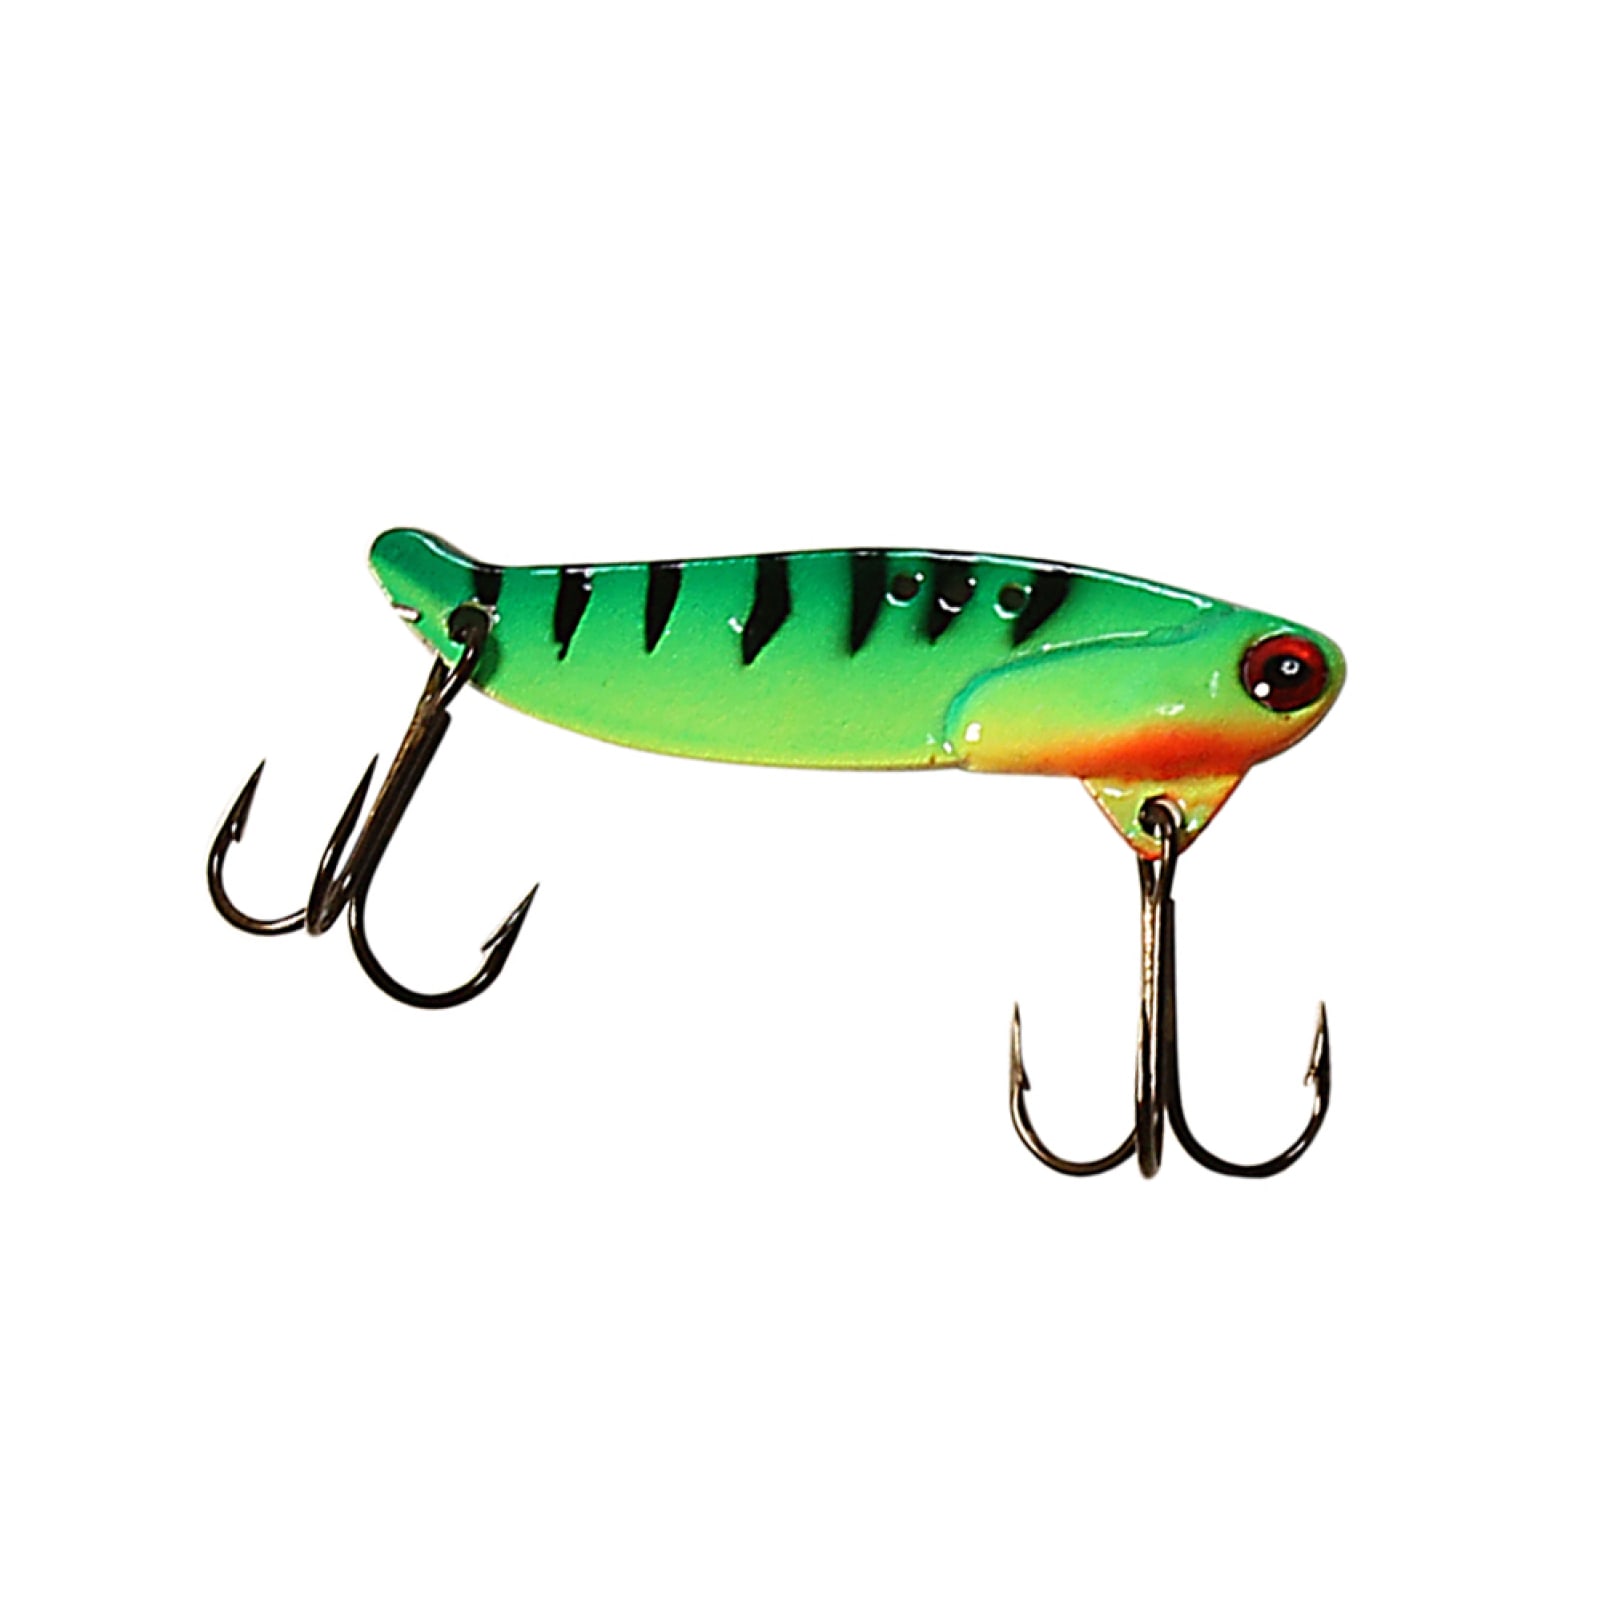 B Fish N Tackle B3 Blade Bait - 1/4 oz - Glow Green Tiger